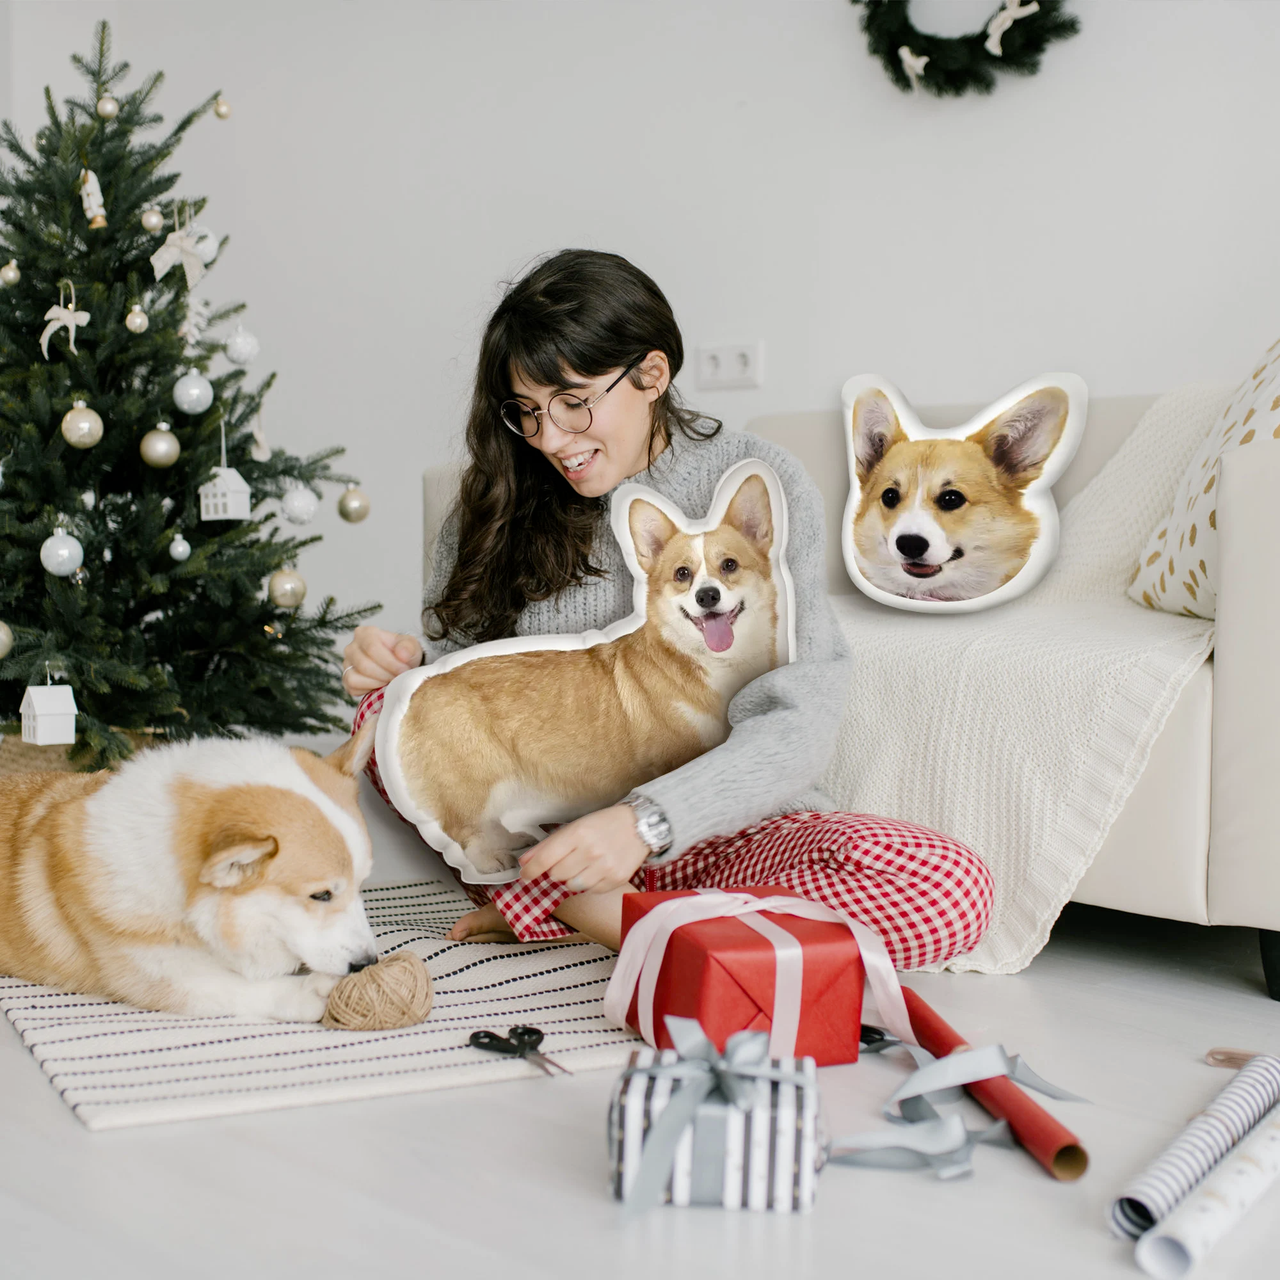 Custom Shape Plush Pillow Case - Gift For Dog Cat Lovers - Cute Pet Photo Pillow Cushions AC